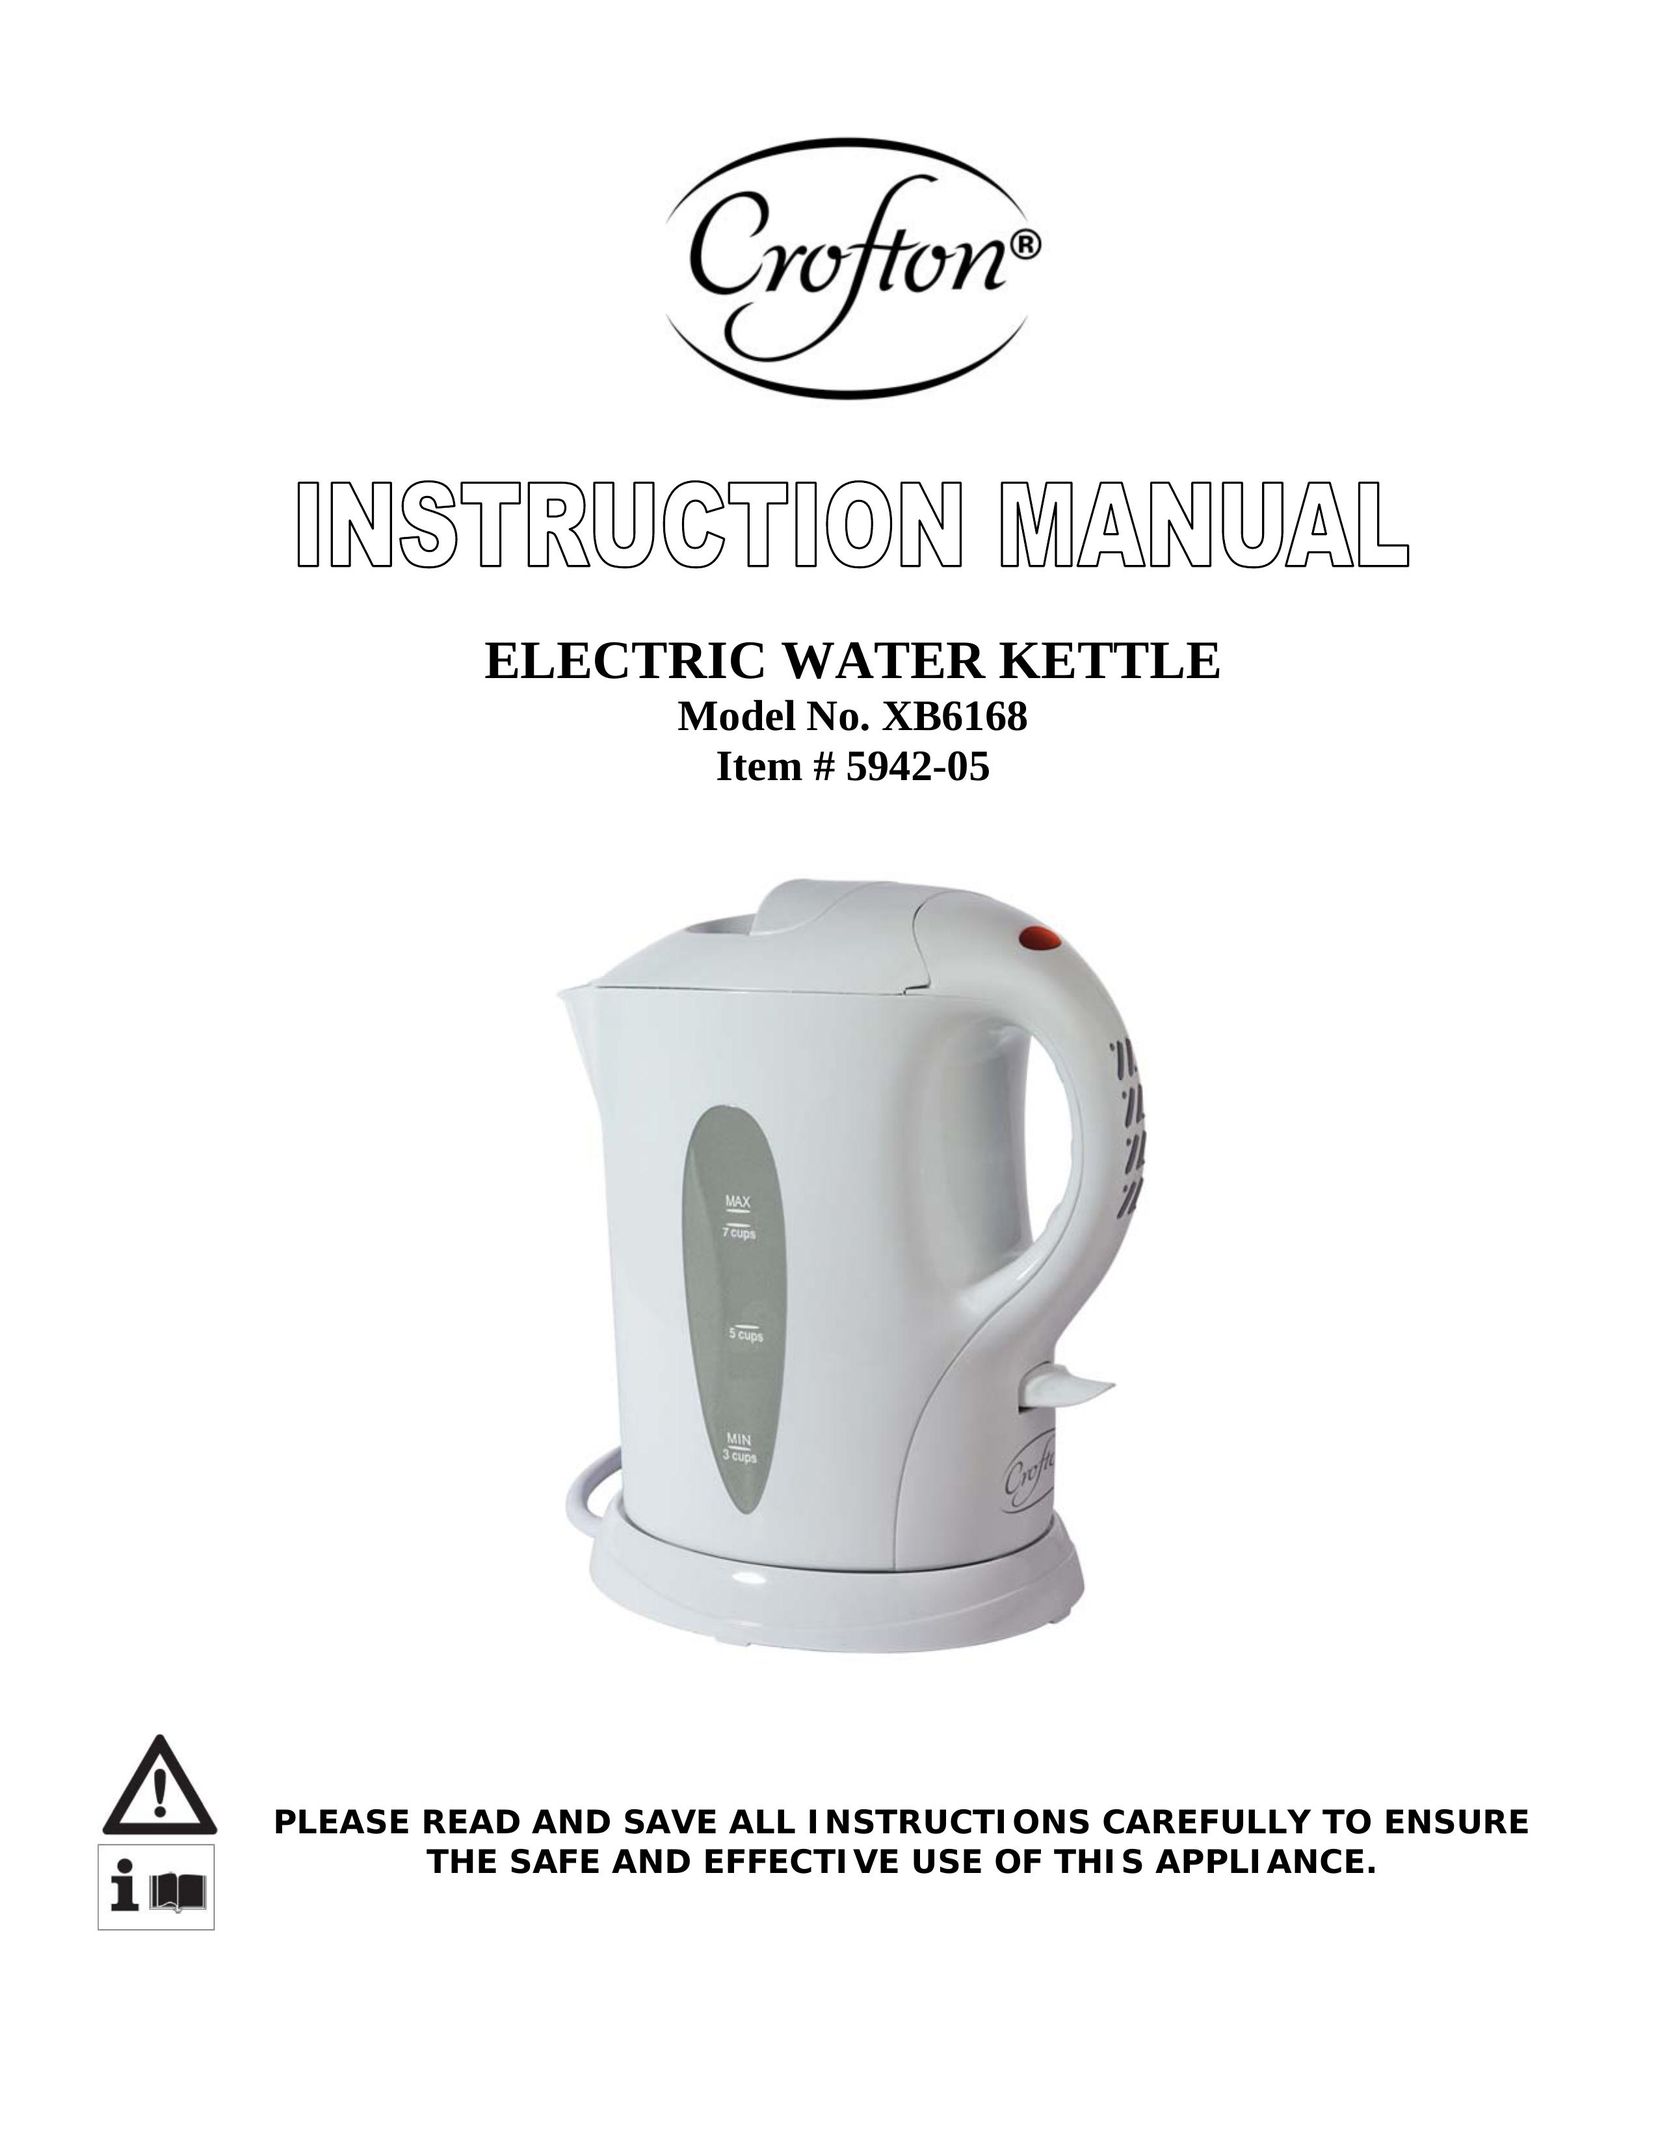 Wachsmuth & Krogmann XB6168 Hot Beverage Maker User Manual